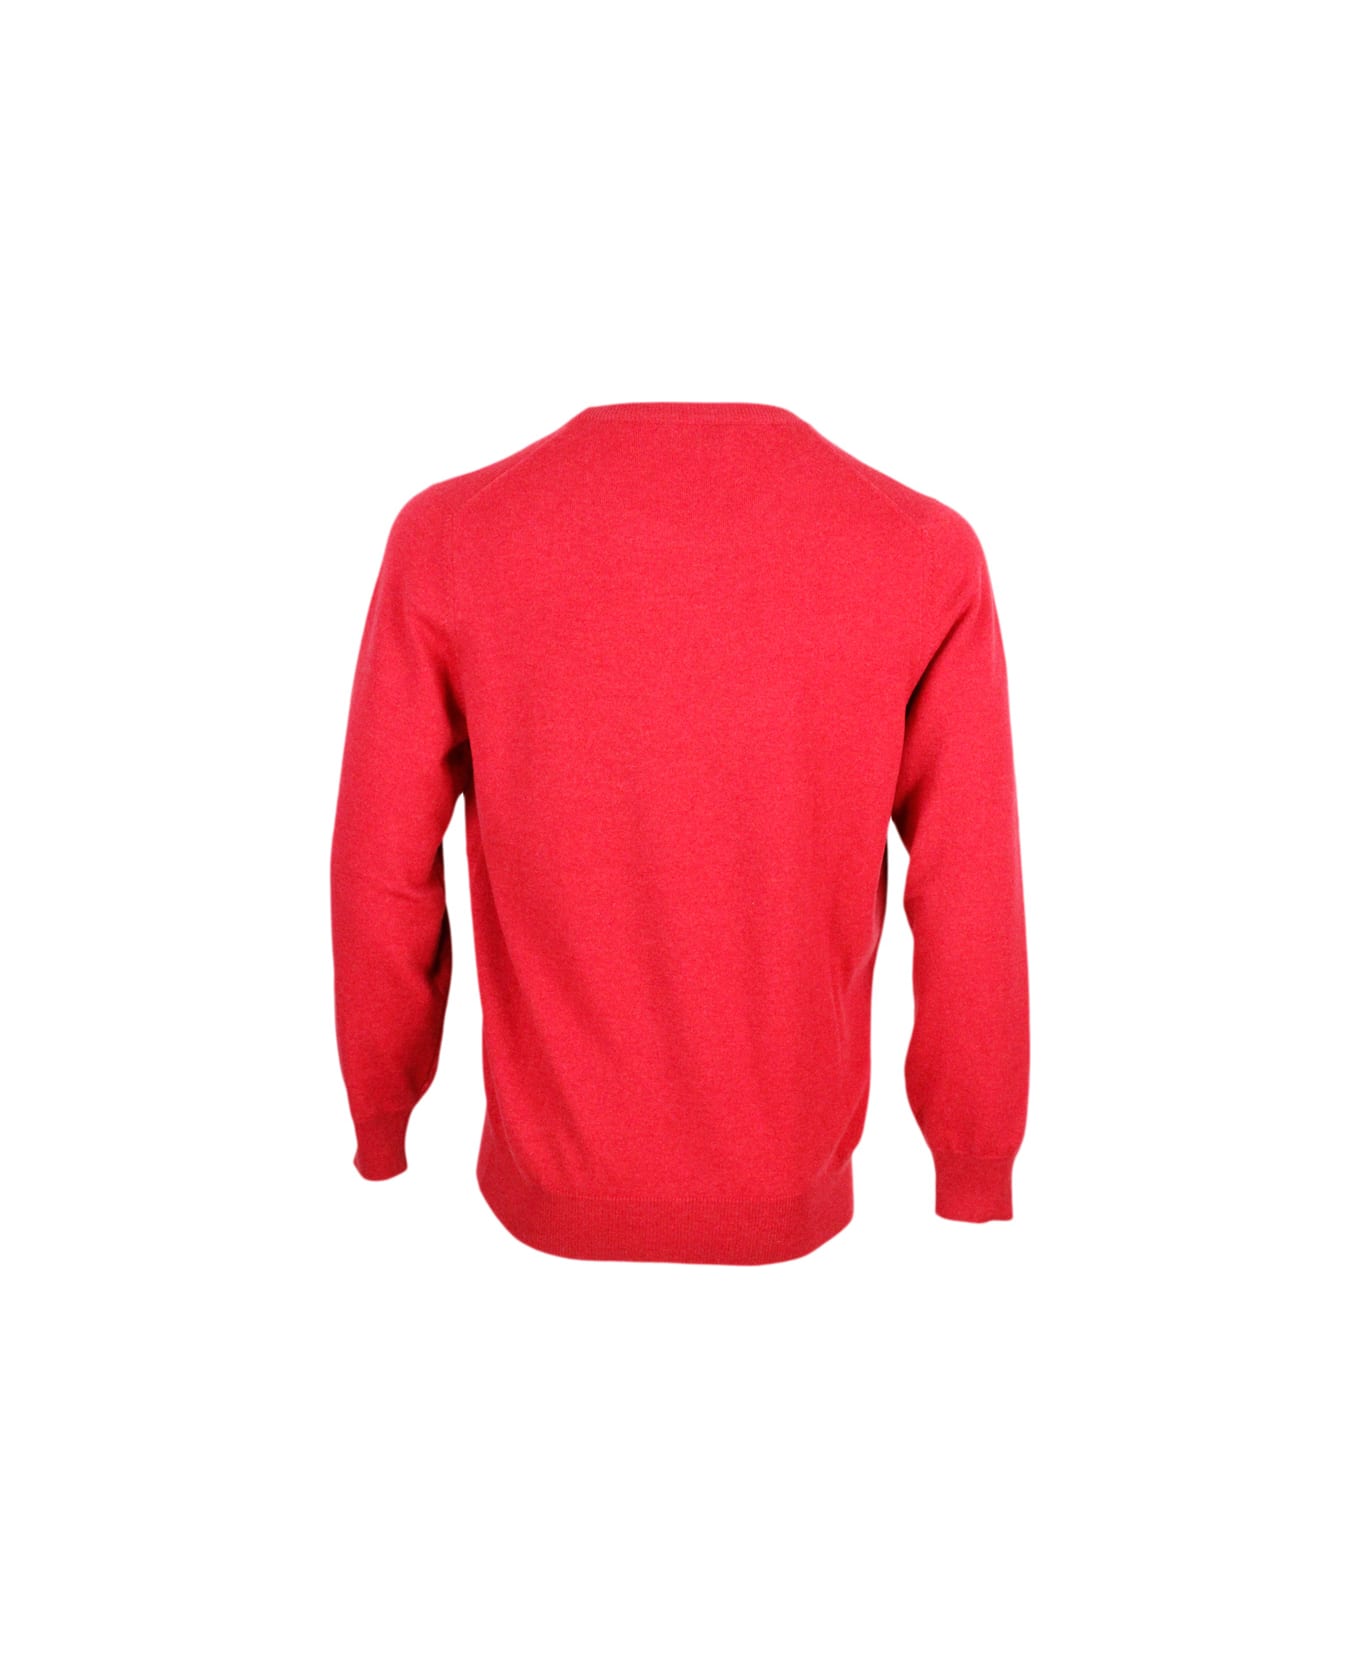 Brunello Cucinelli Long-sleeved Crew-neck Sweater - Red Magenta